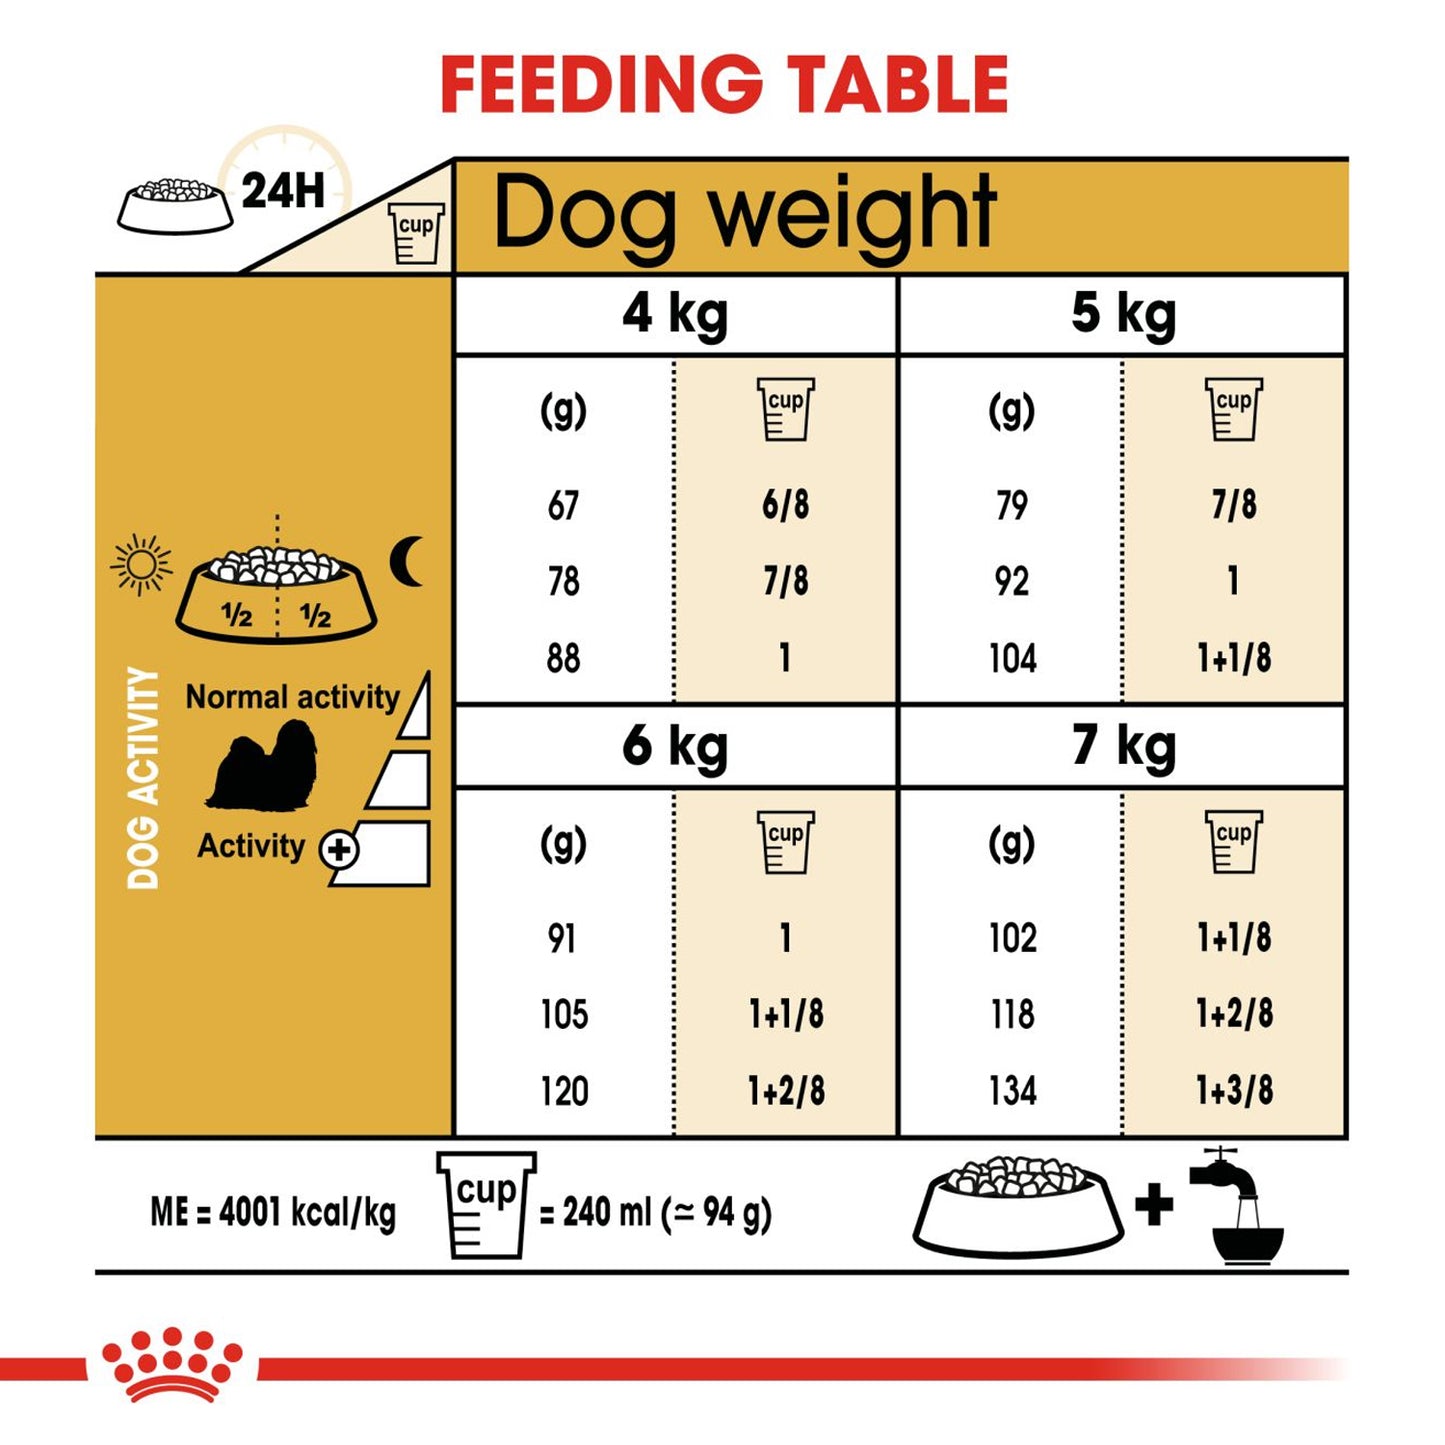 Royal Canin - Shih Tzu Adult Dry Dog Food